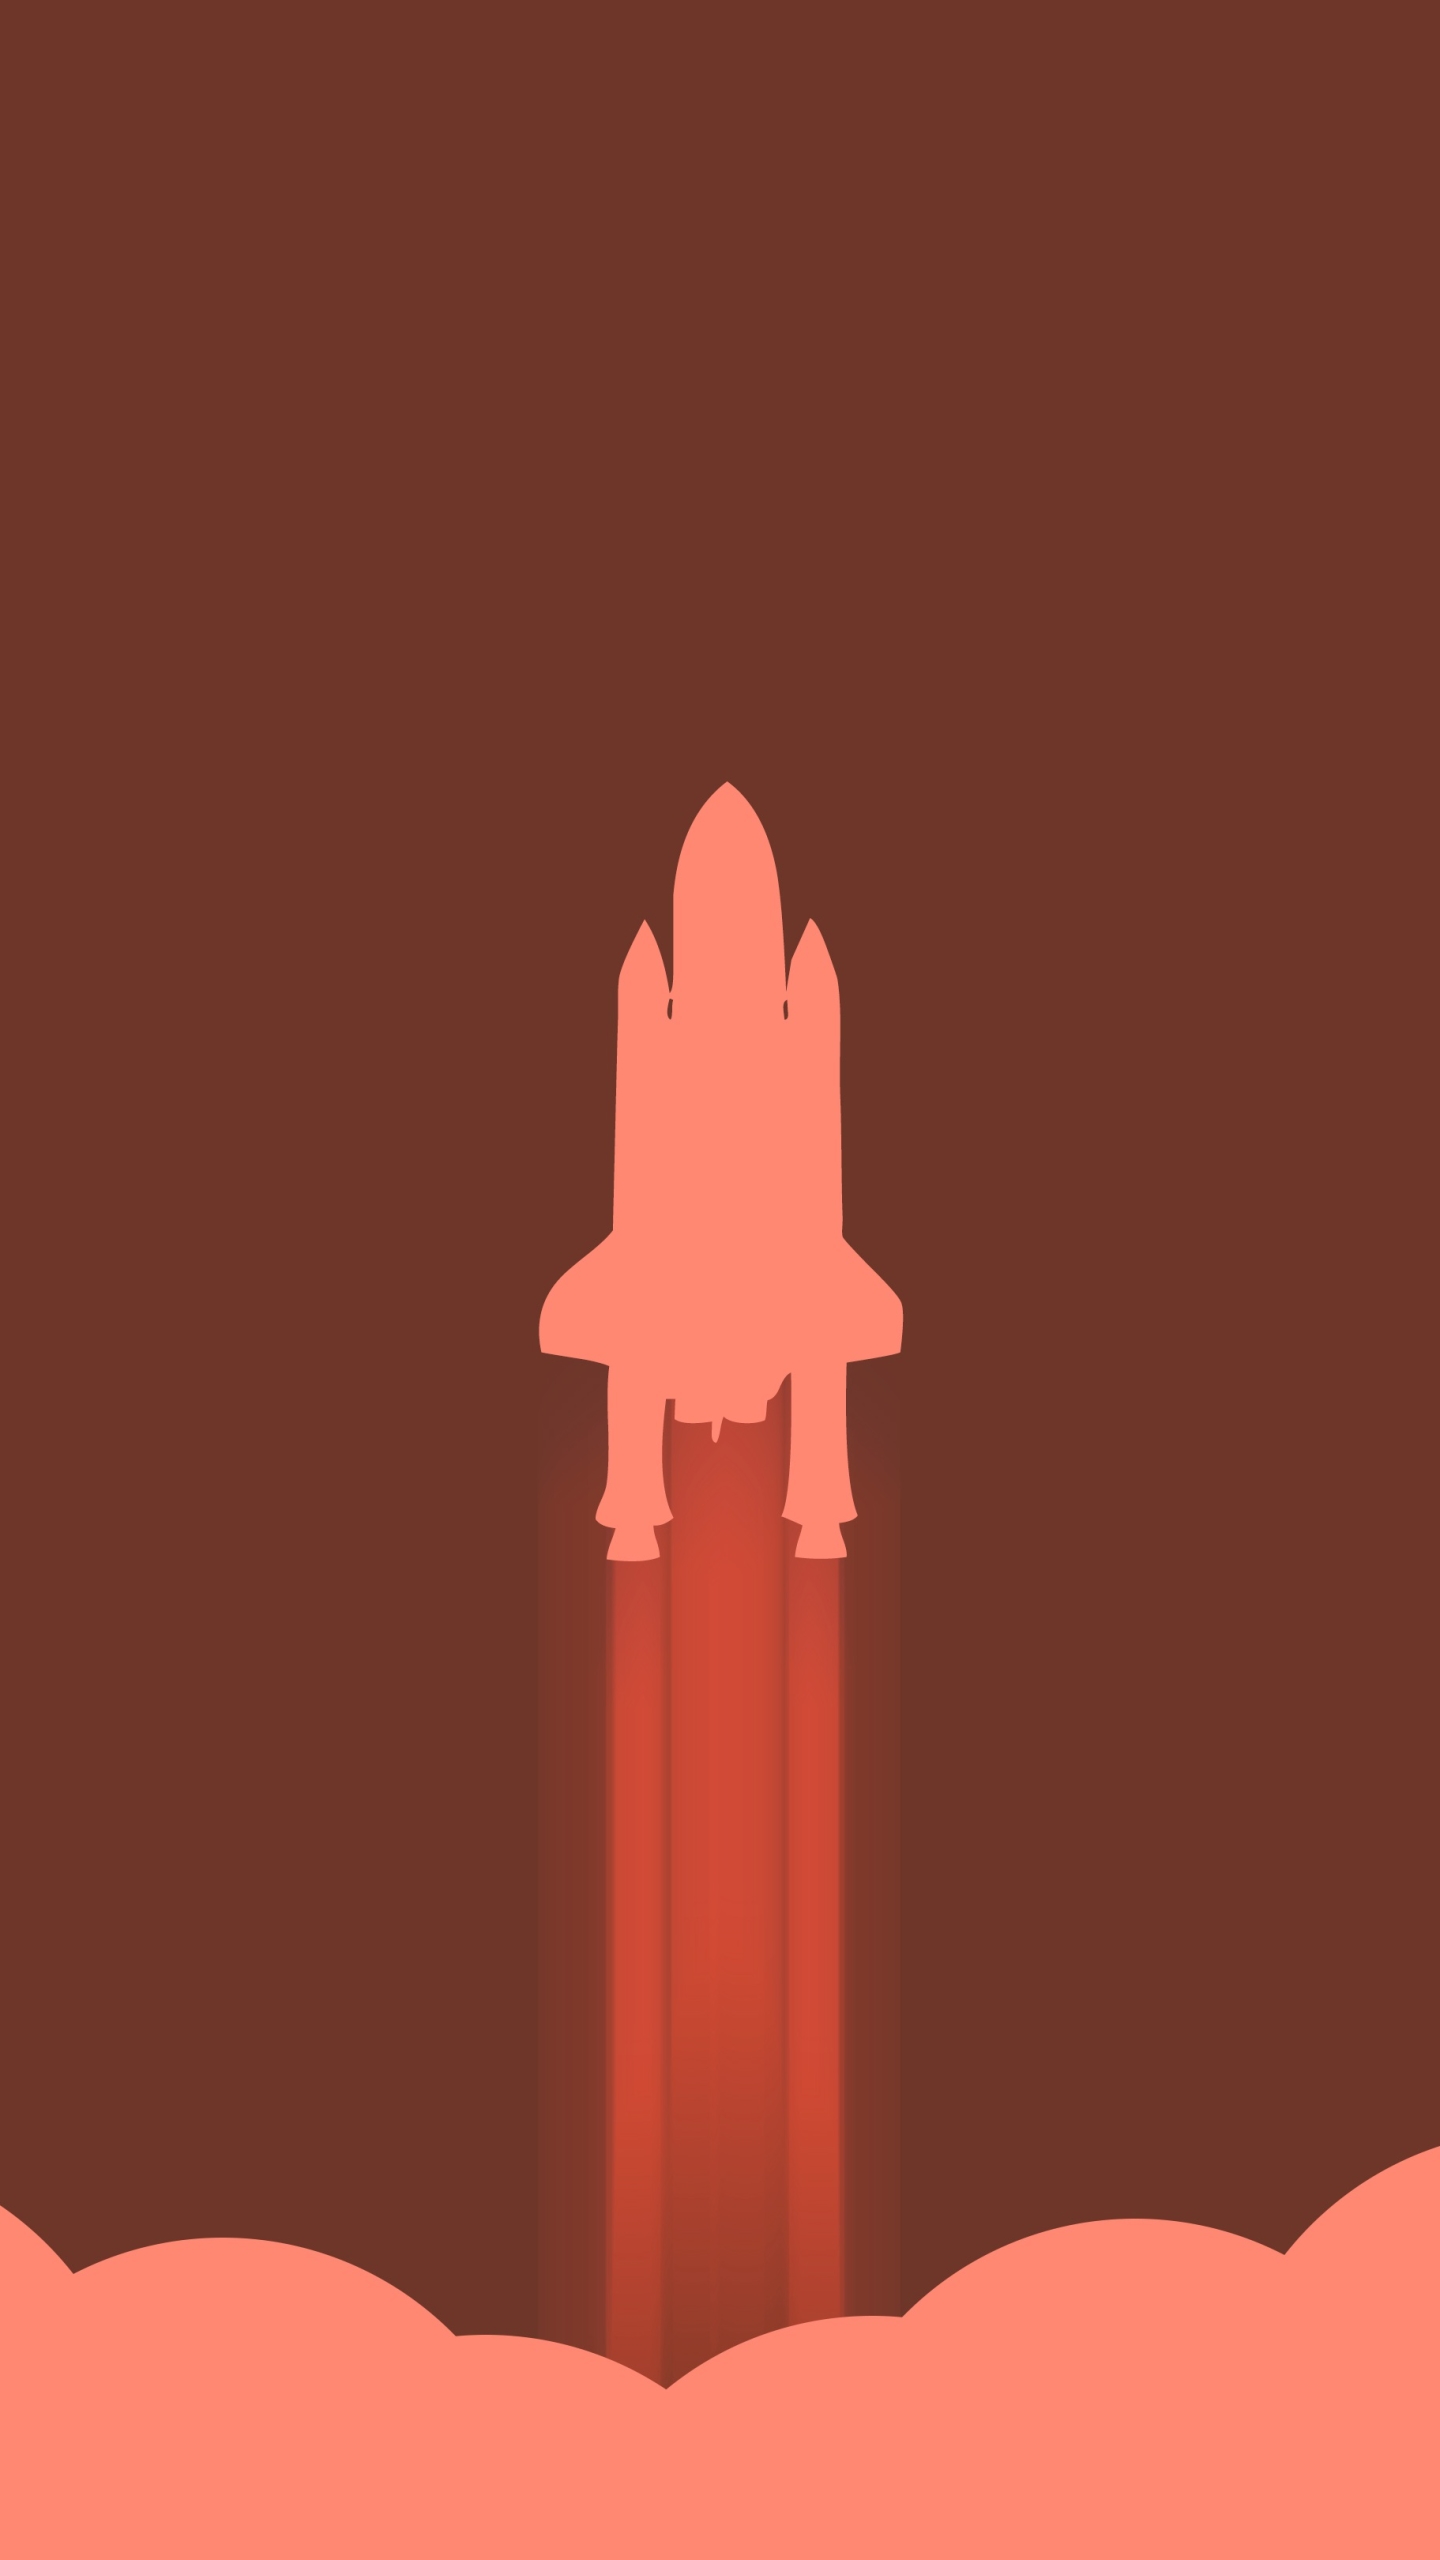 Rocket Launch by Smim Bip